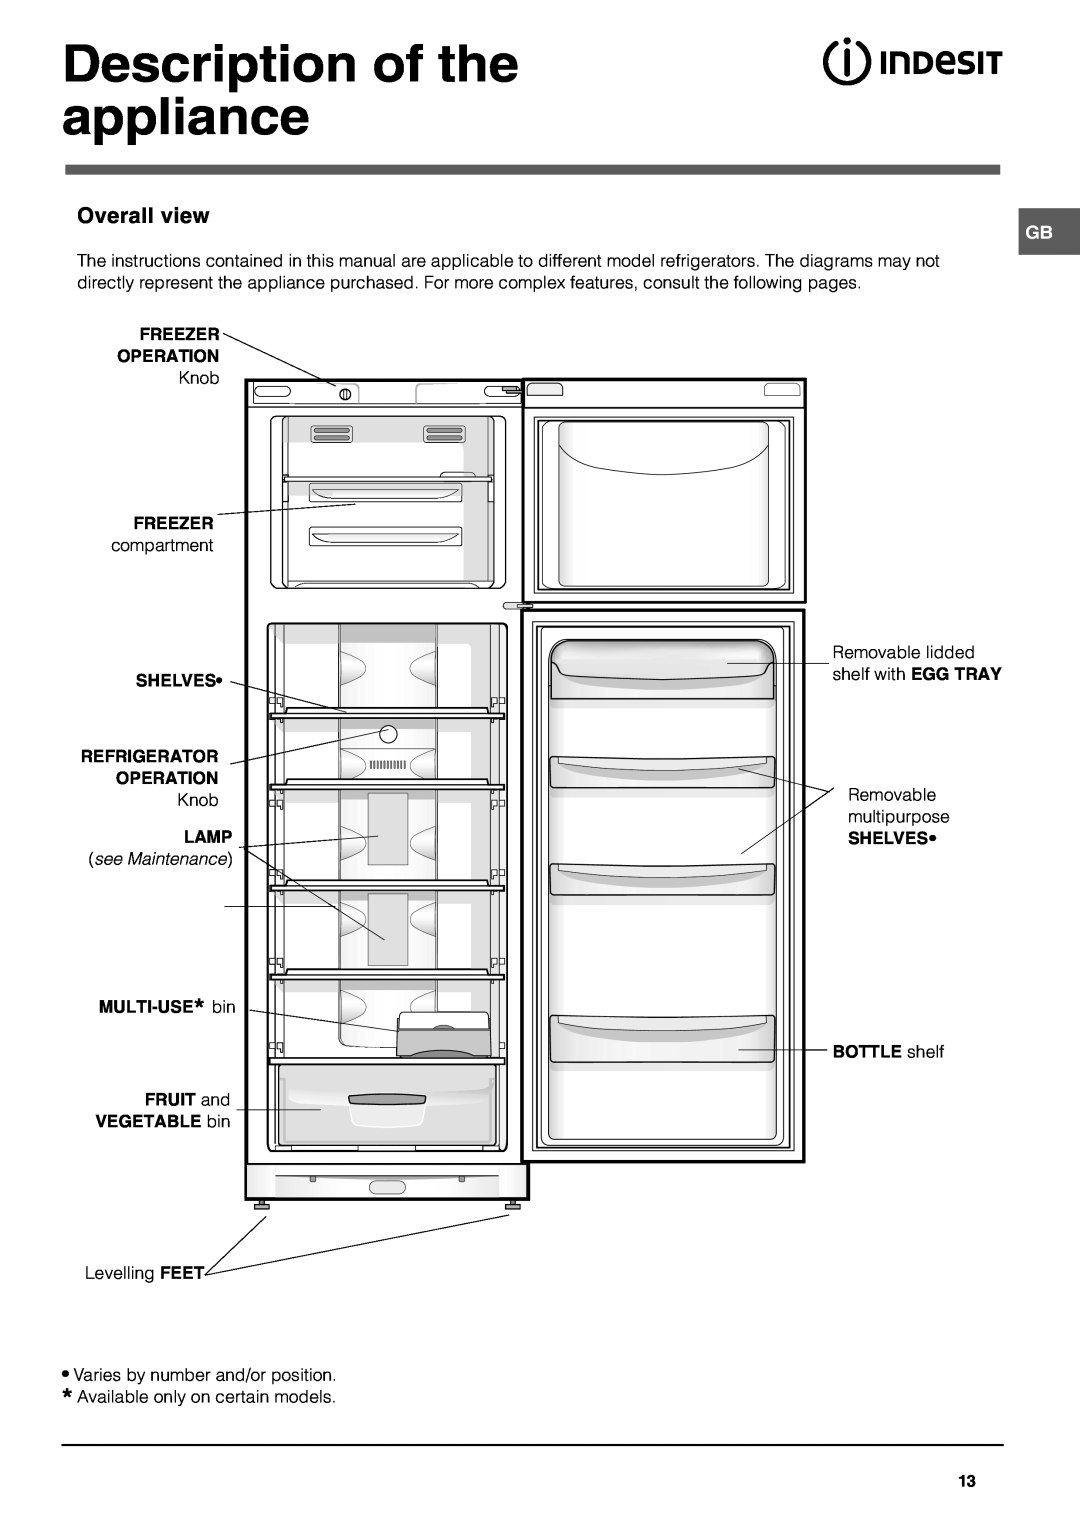 Indesit TAN 13 NF Description of the appliance, Freezer, Operation, Shelves, Refrigerator, Lamp, see Maintenance, SHELVESù 